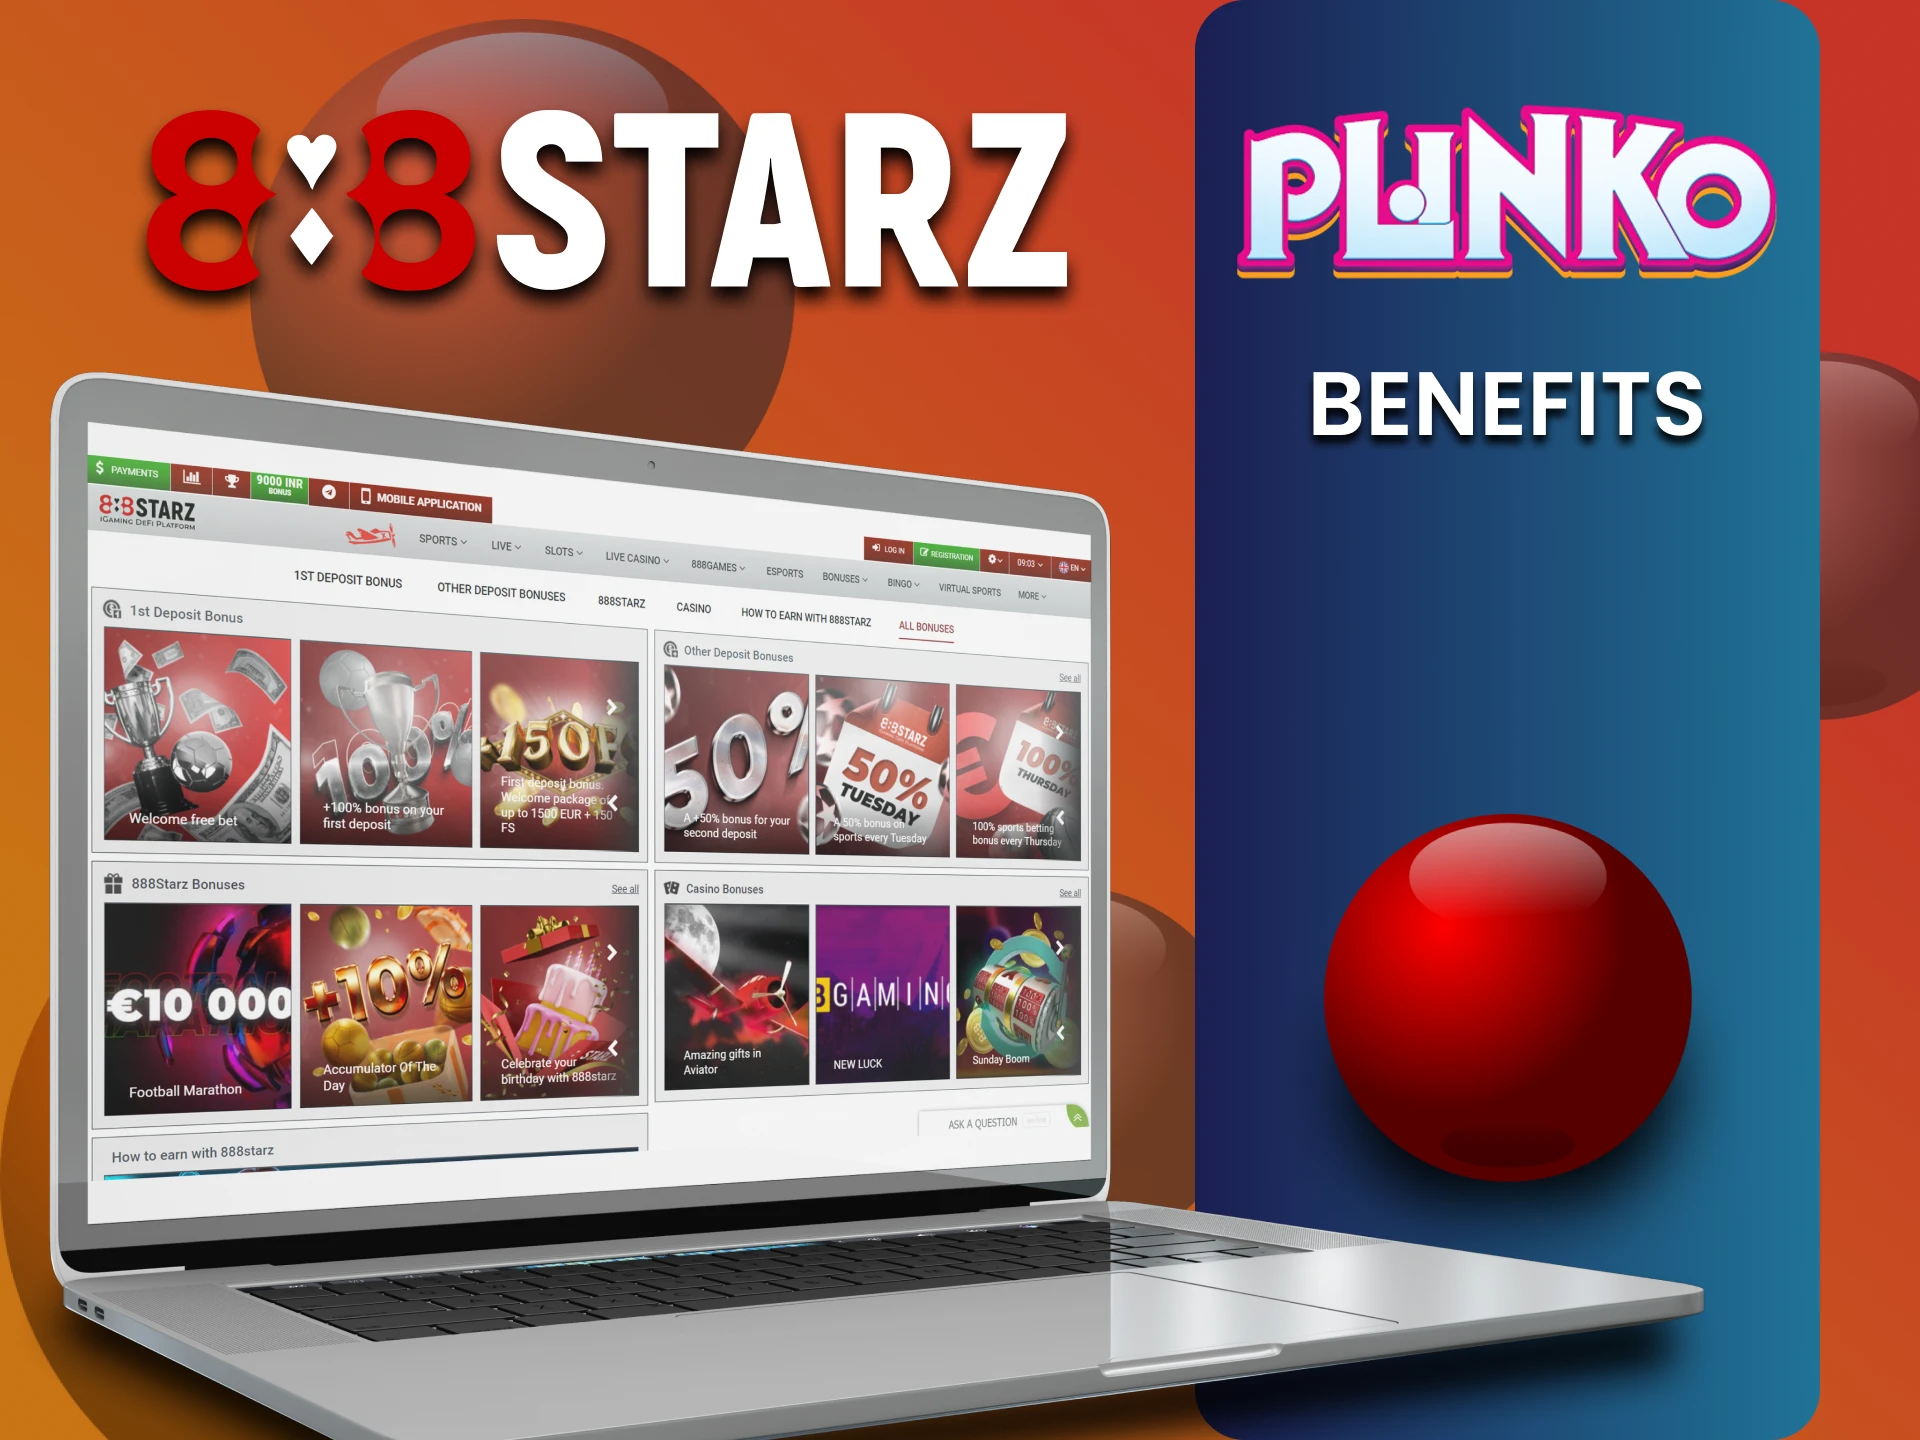 888starz has many benefits for Plinko users.